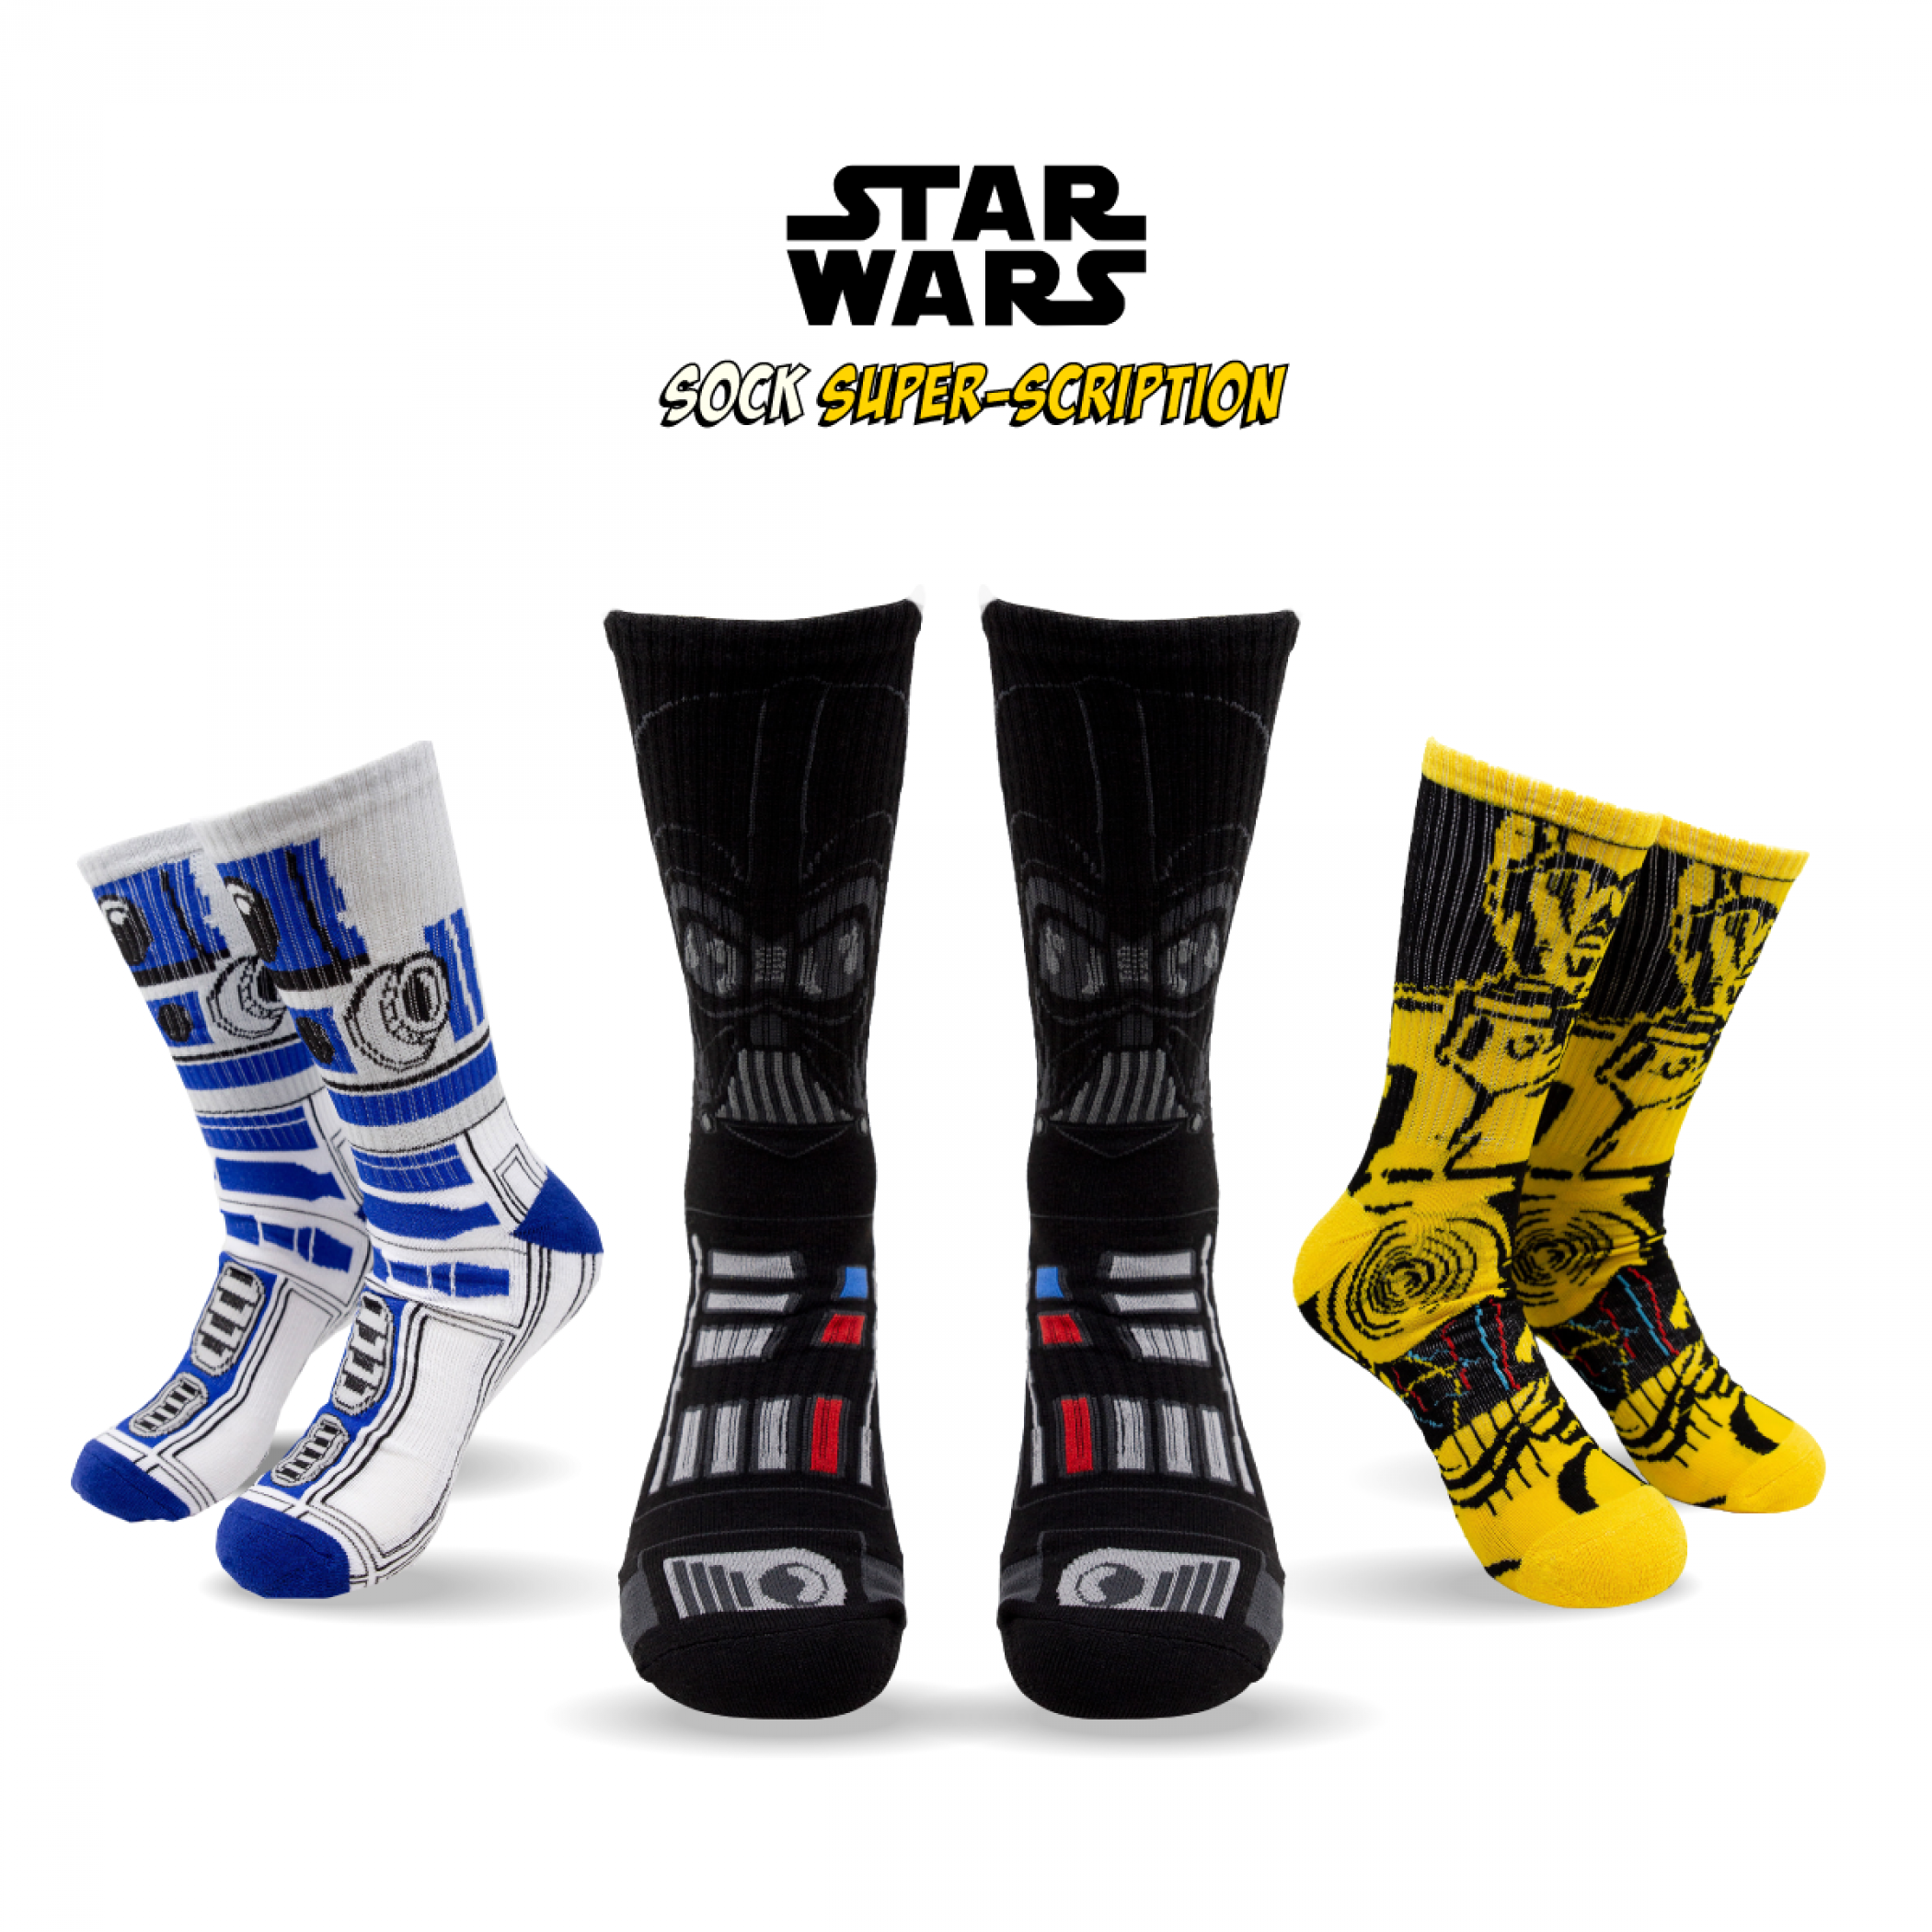 Star Wars Sock Super-Scription